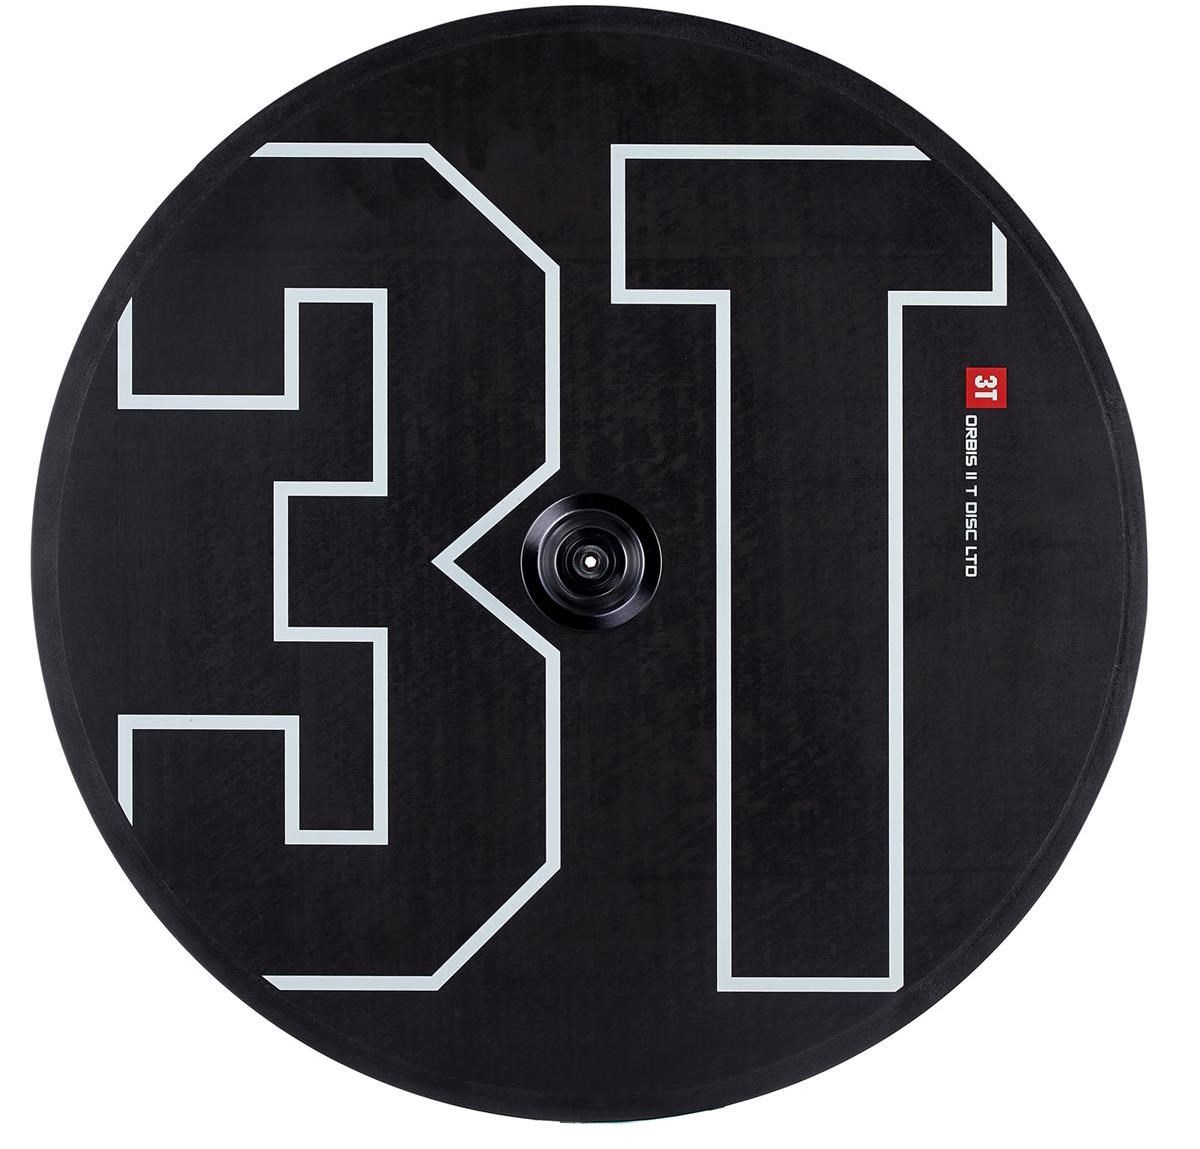 3T Orbis II T Disc LTD Road Wheel product image